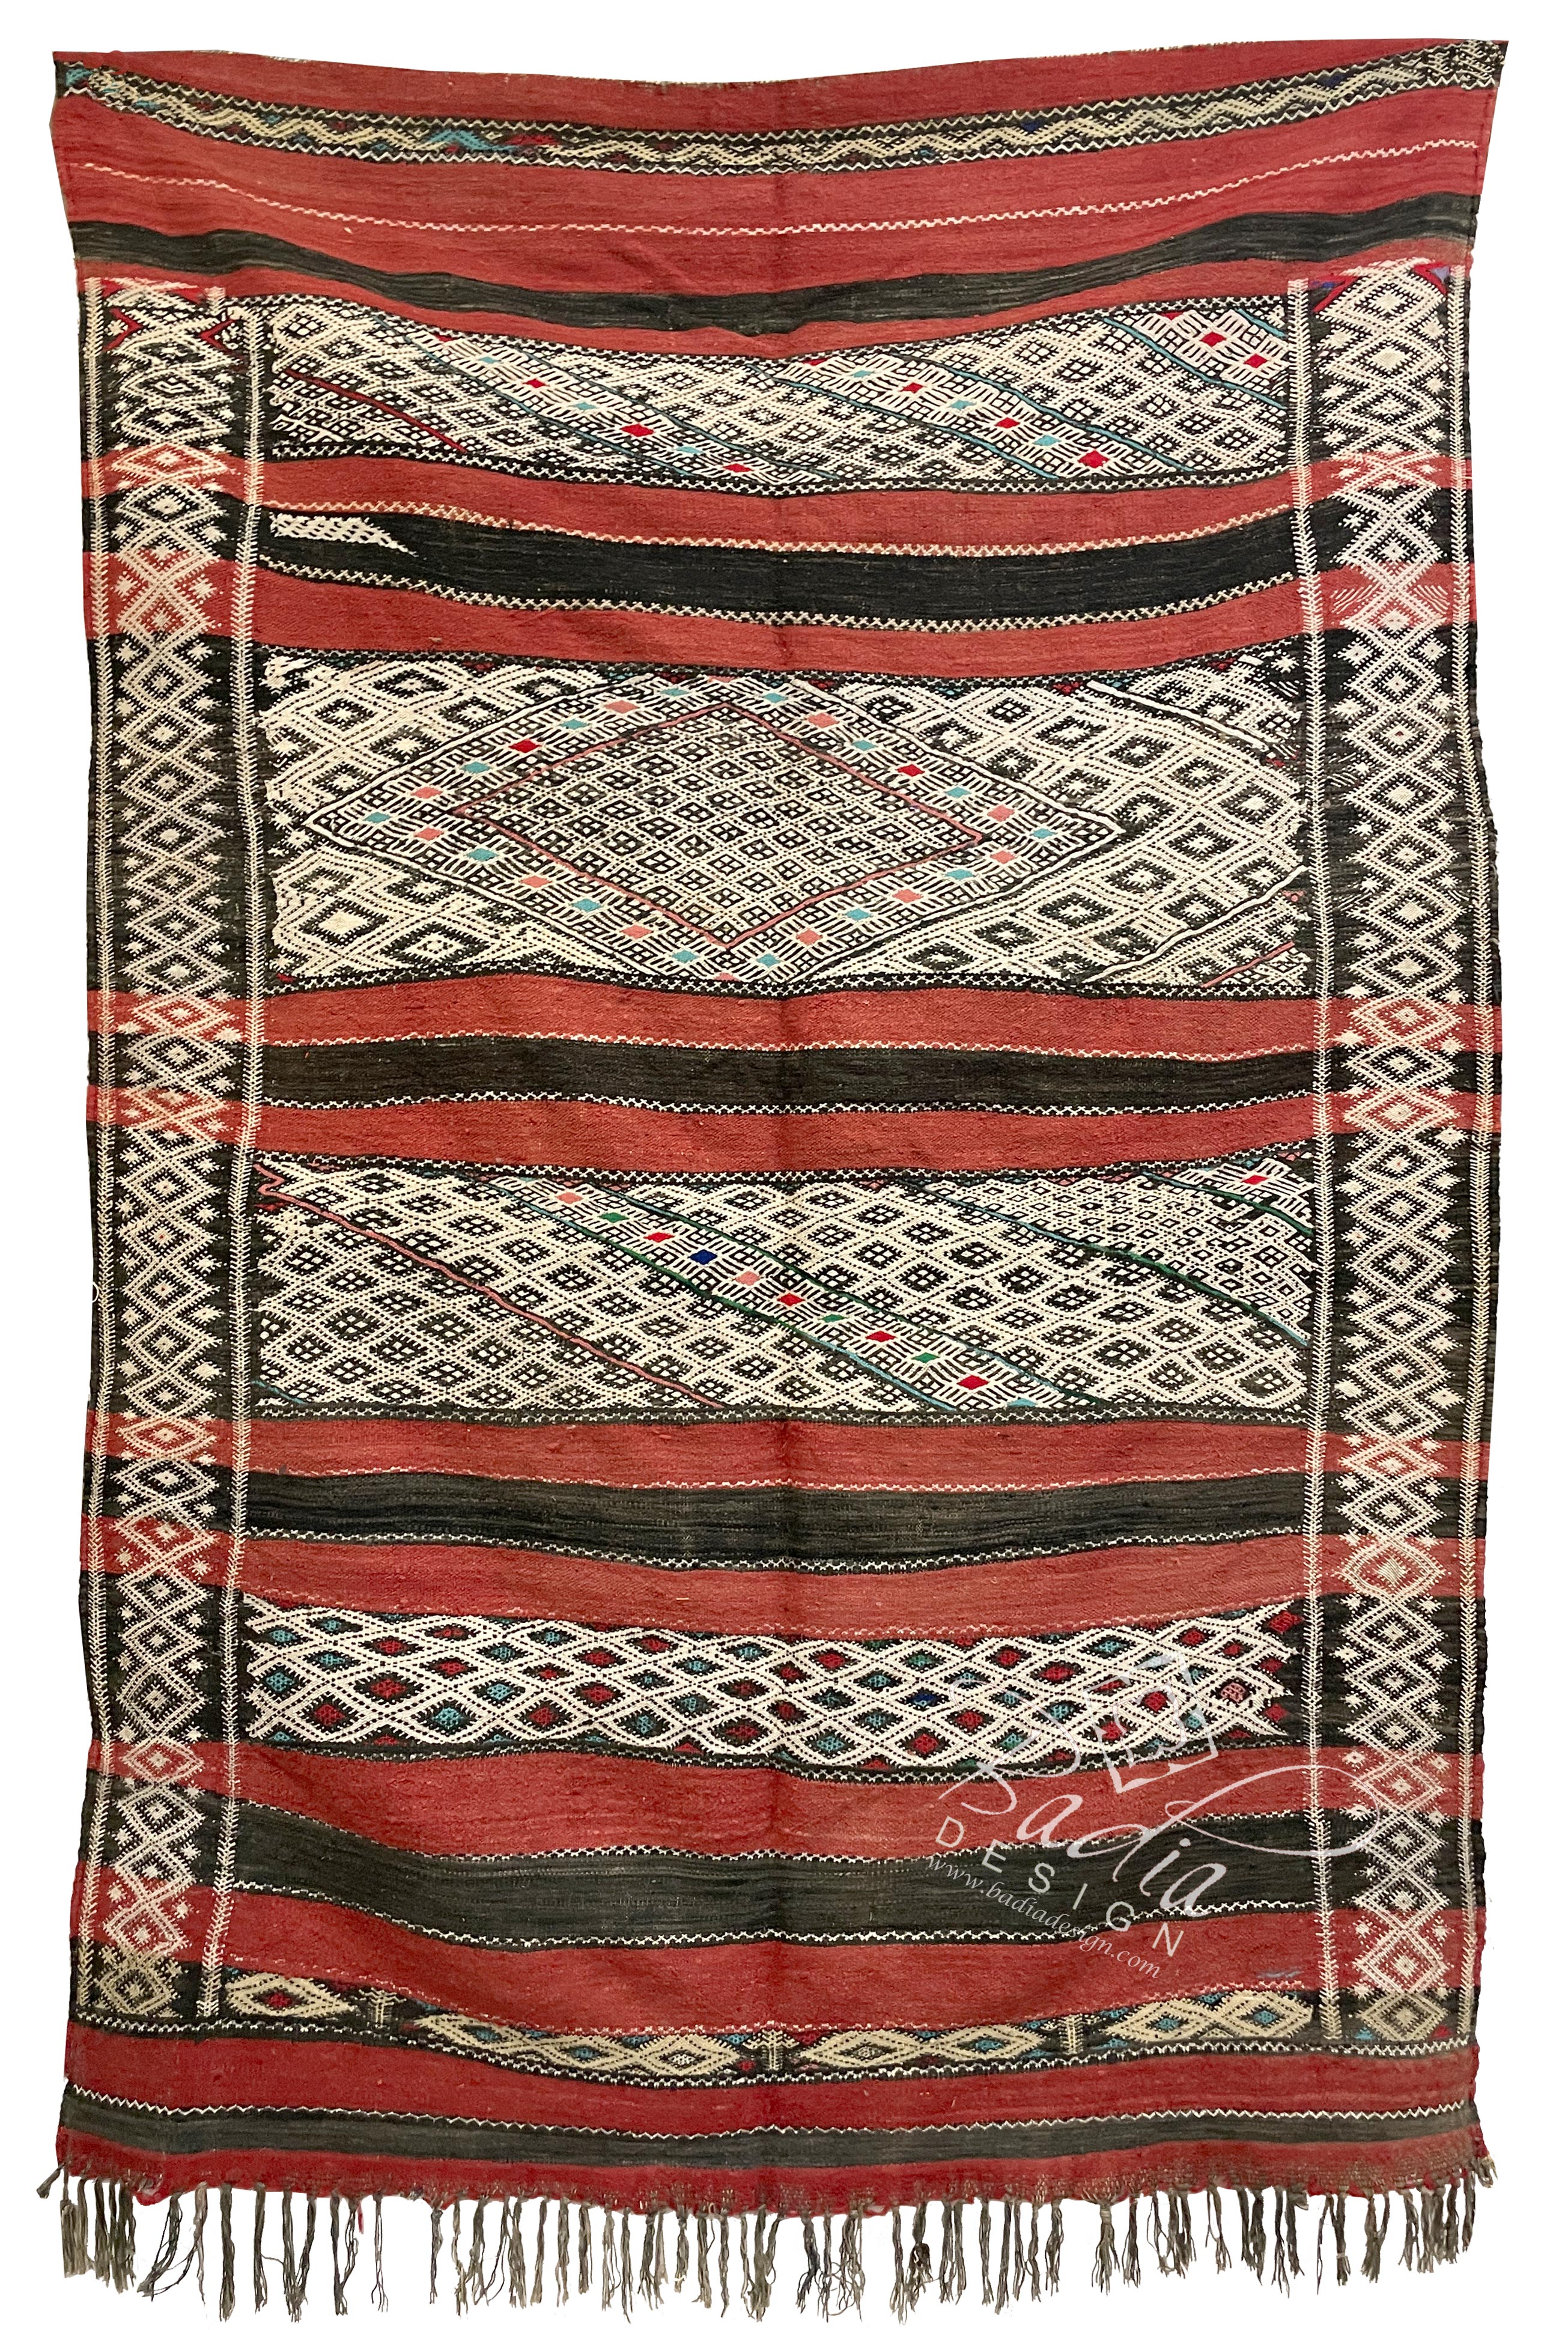 moroccan-kilim-rug-with-tribal-designs-r0246.jpg